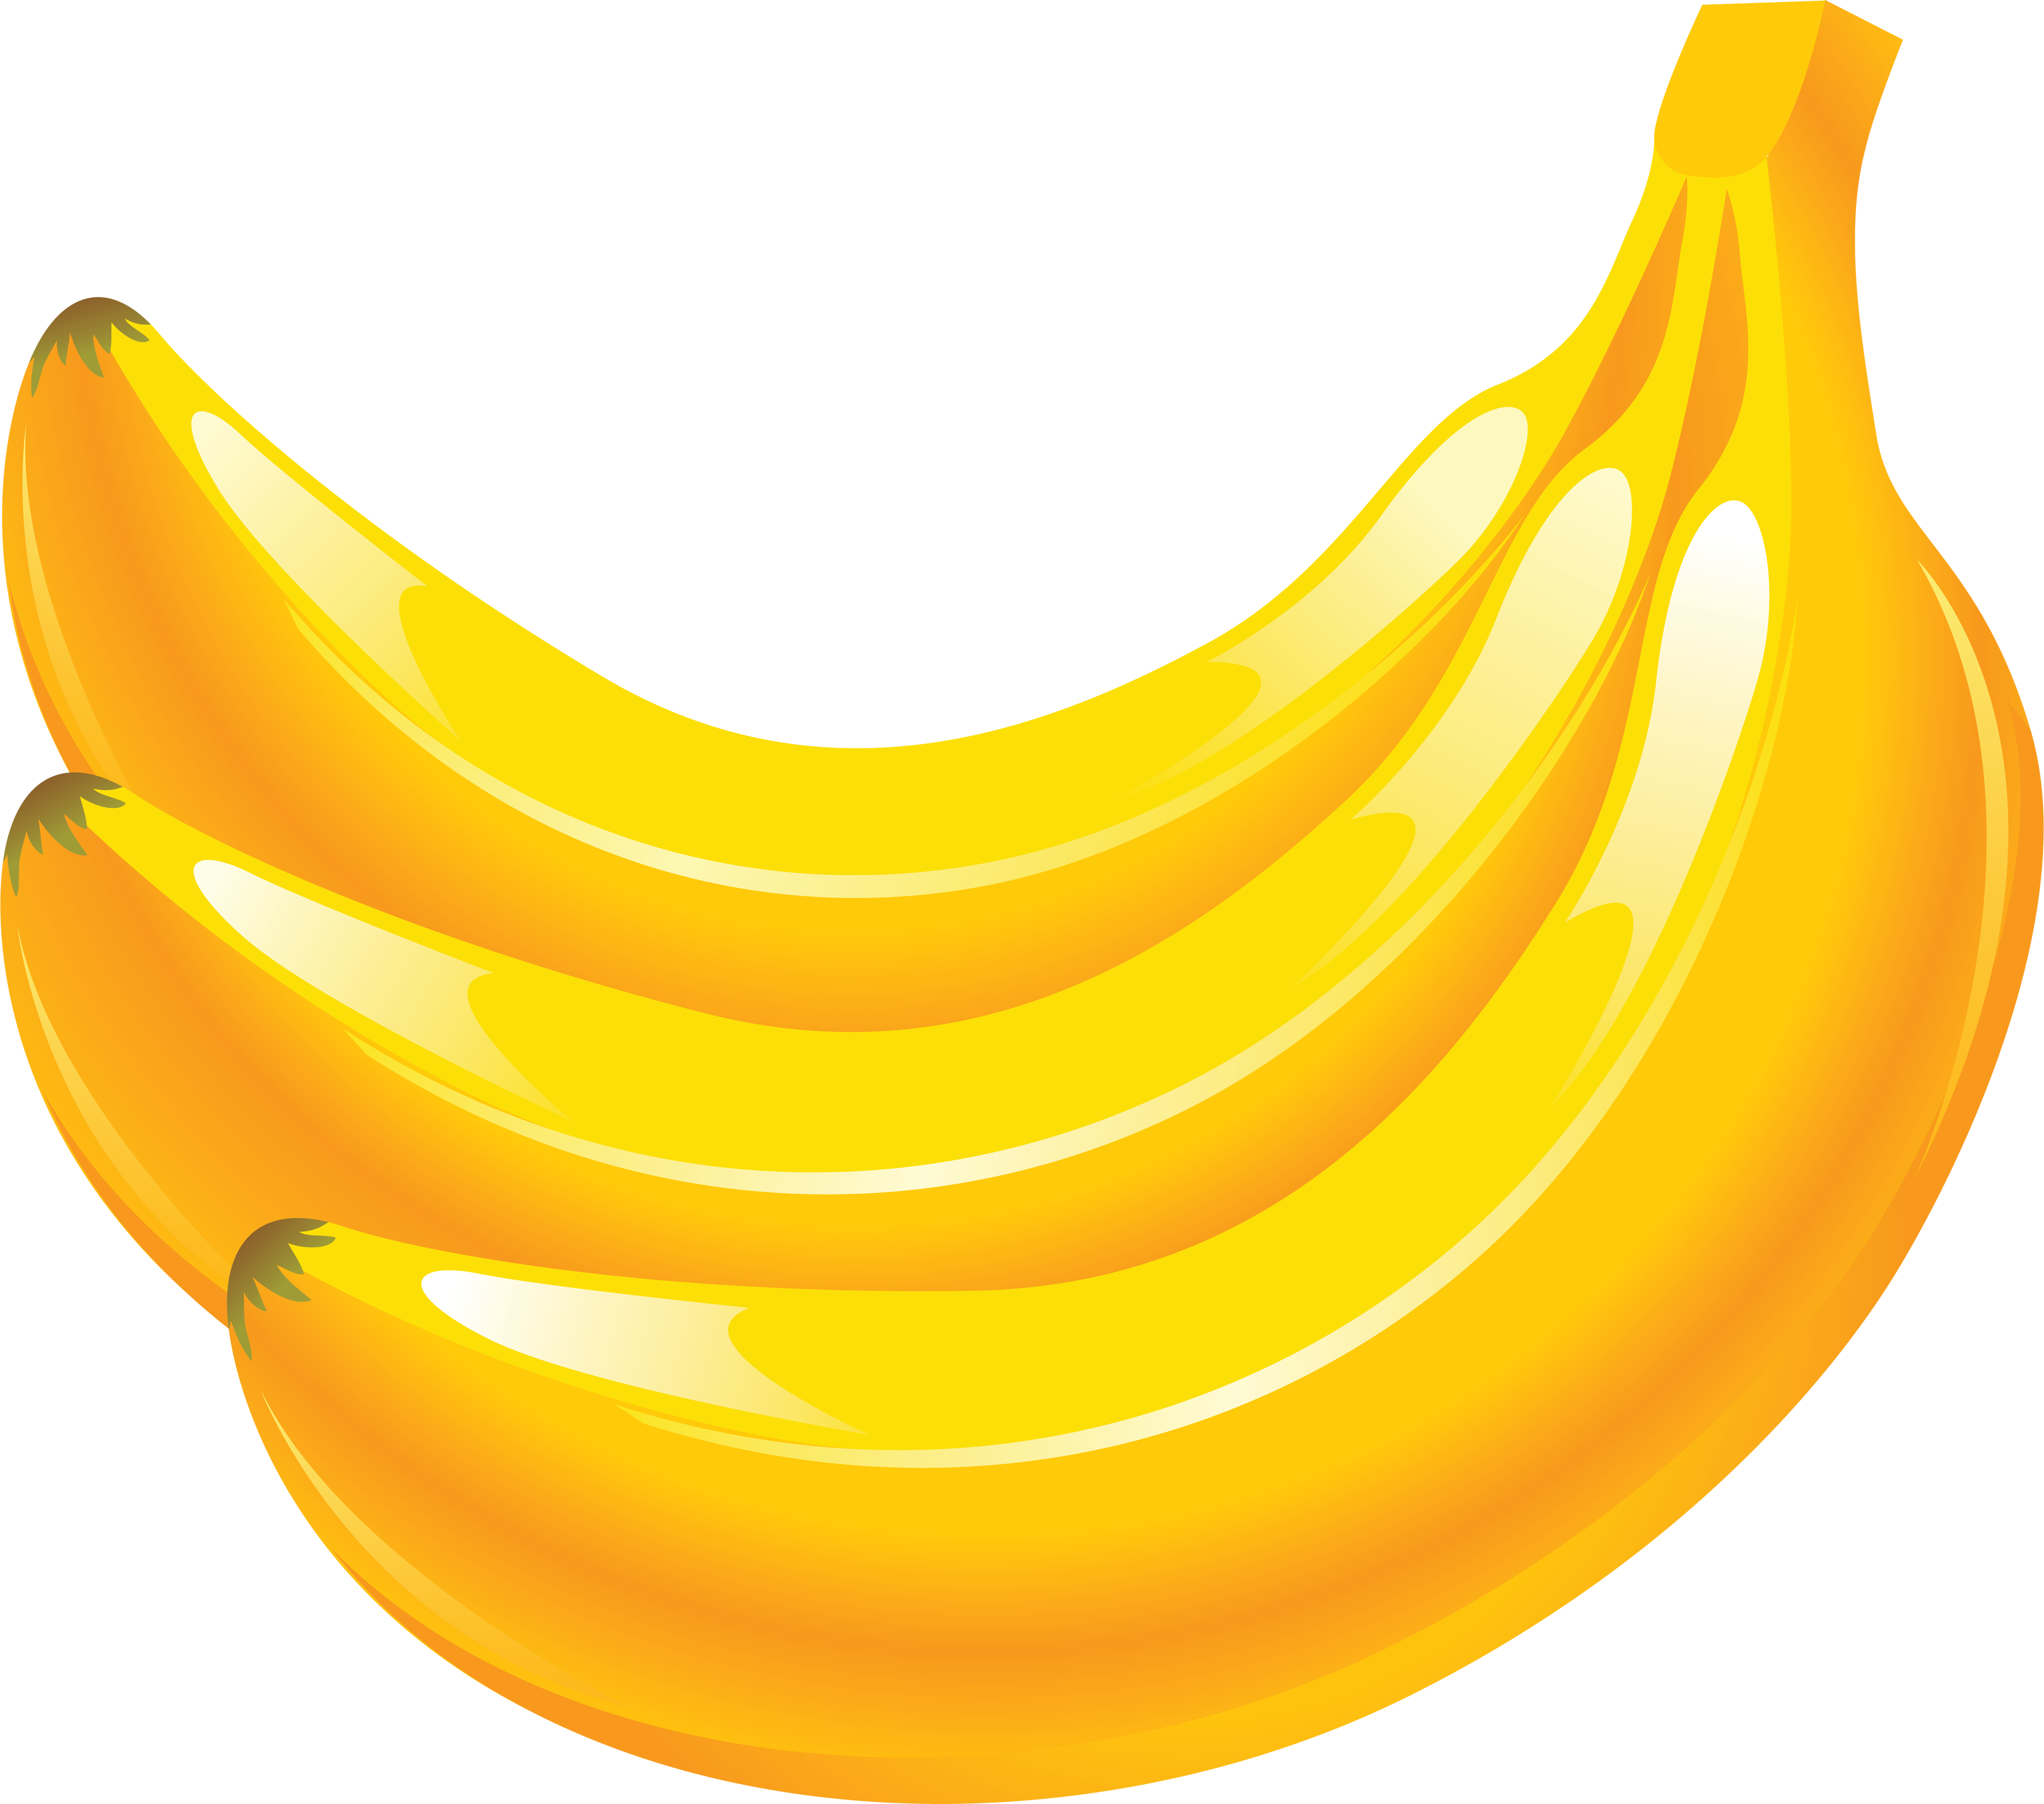 Png image free picture. Bananas clipart 1 banana